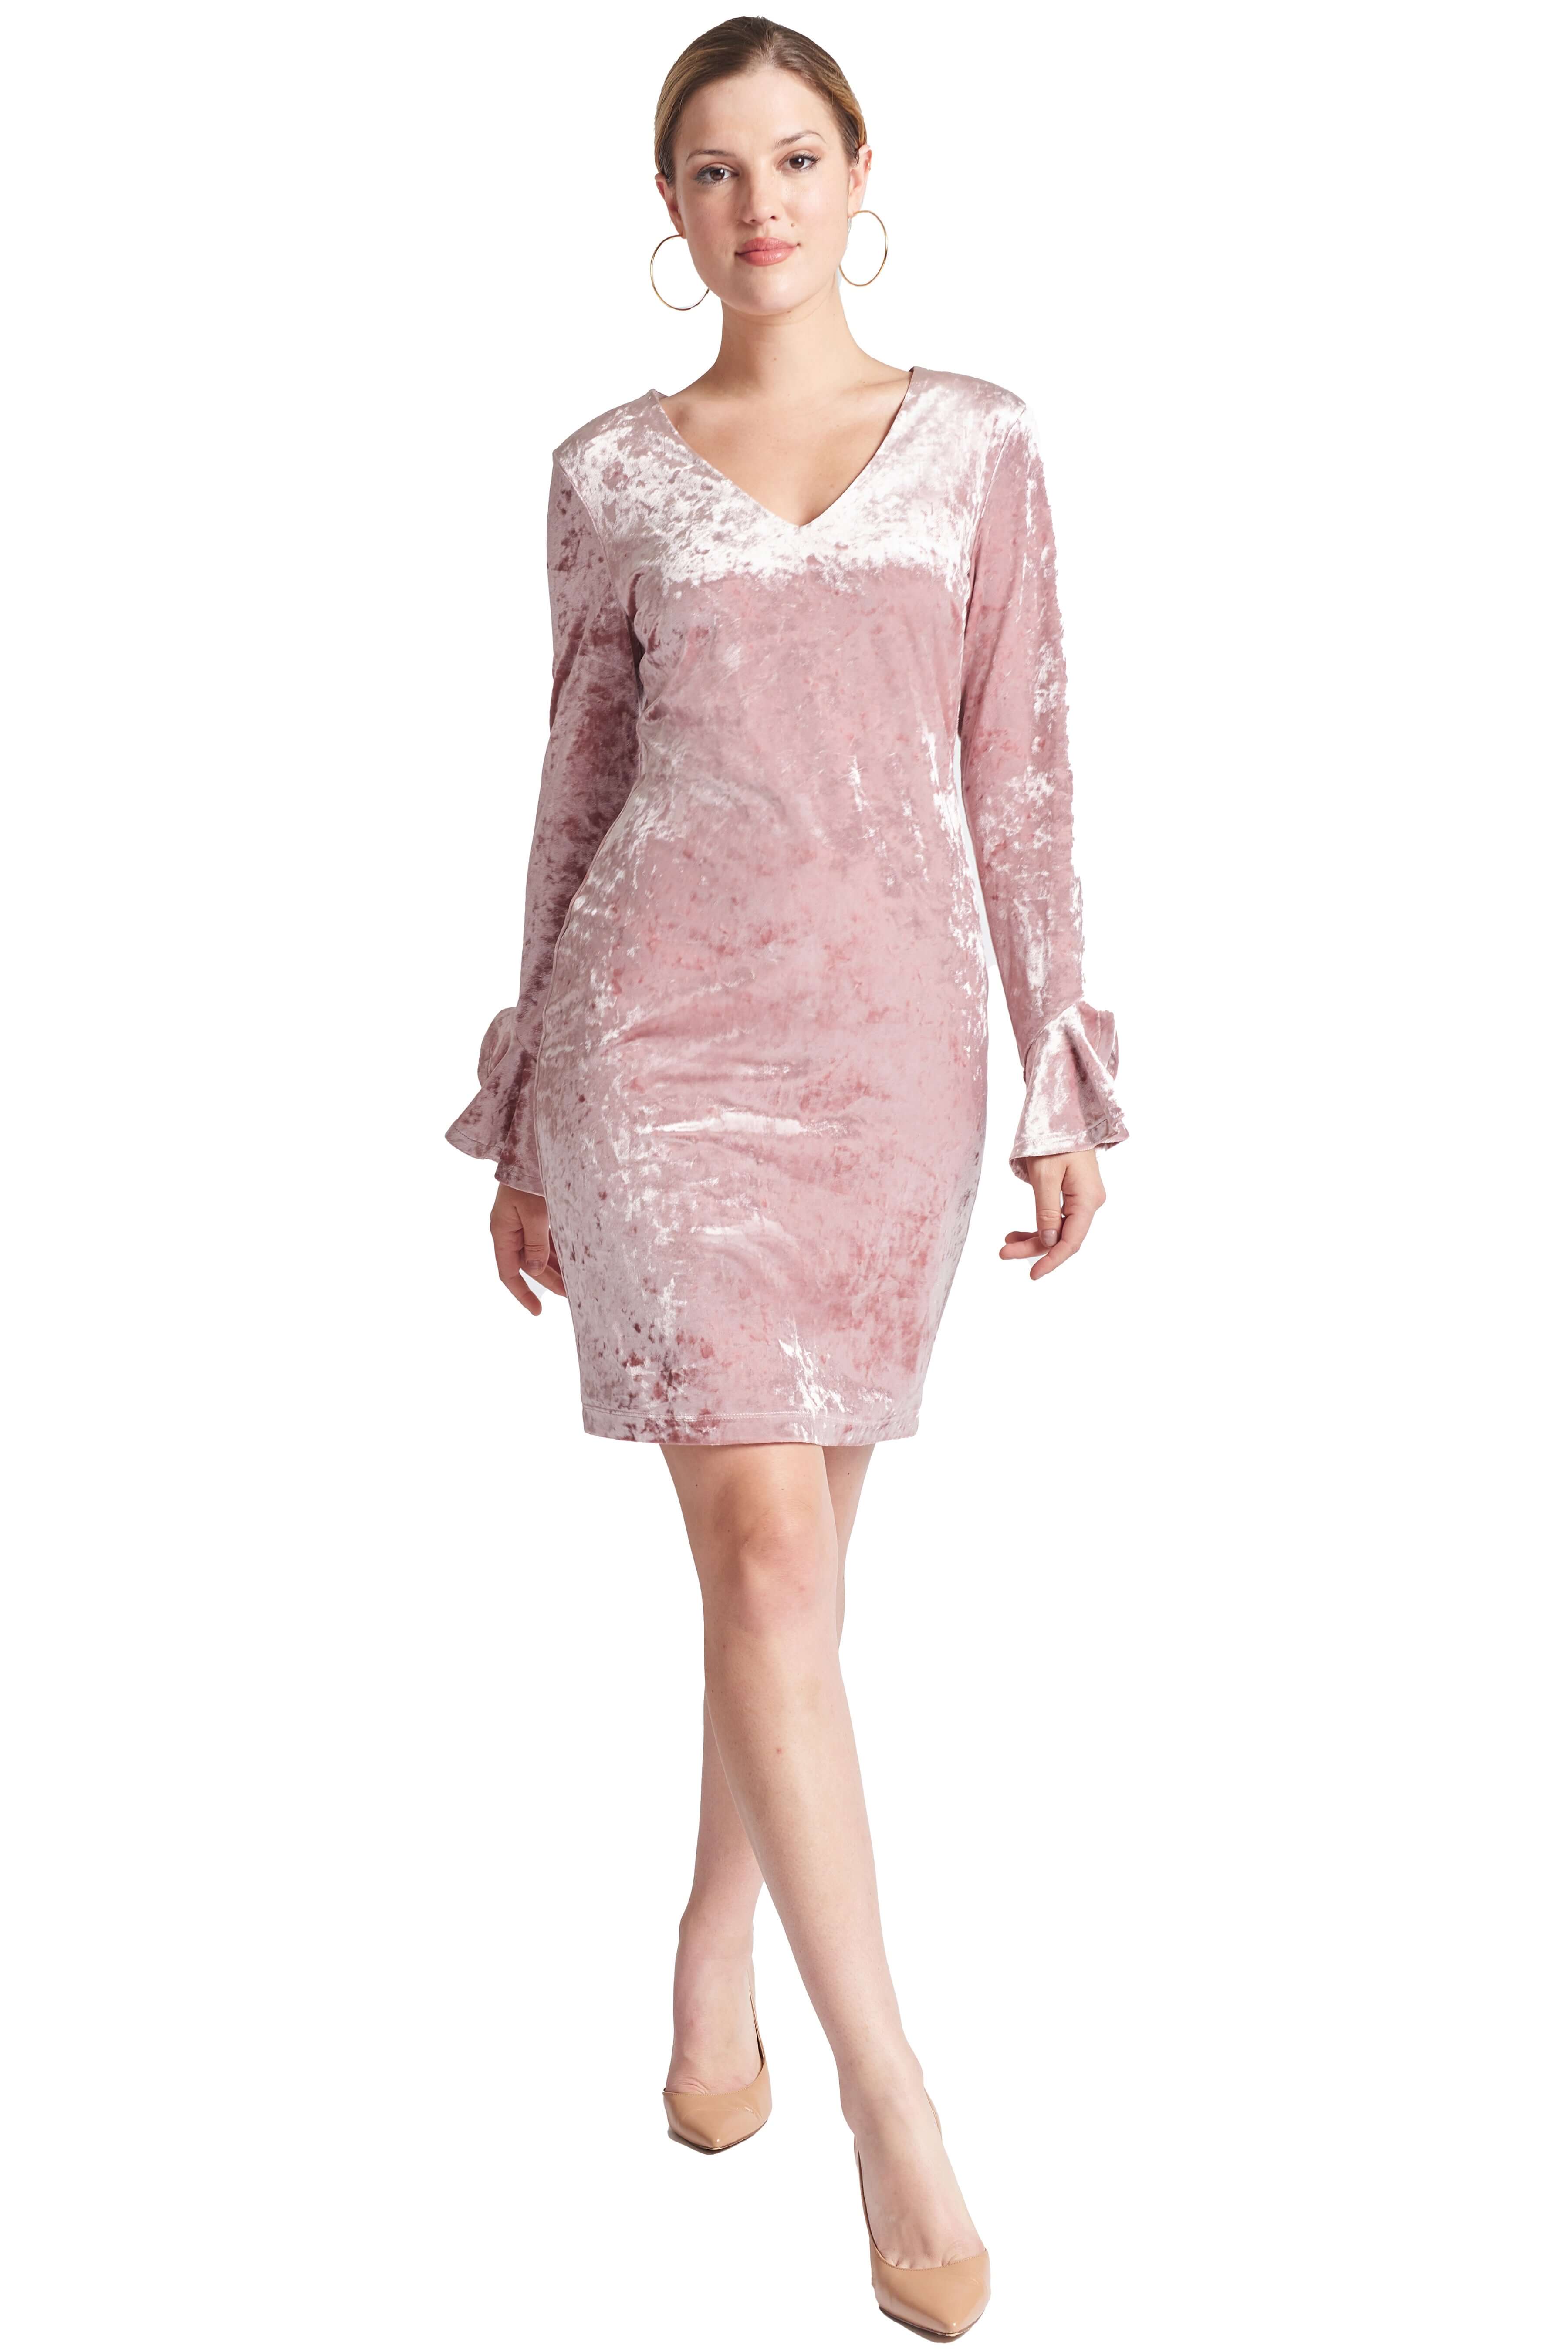 Front view of model wearing the Simona Maghen Kara Dress, blush pink stretch velvet short dress with v-neckline, long sleeves & bell sleeves.